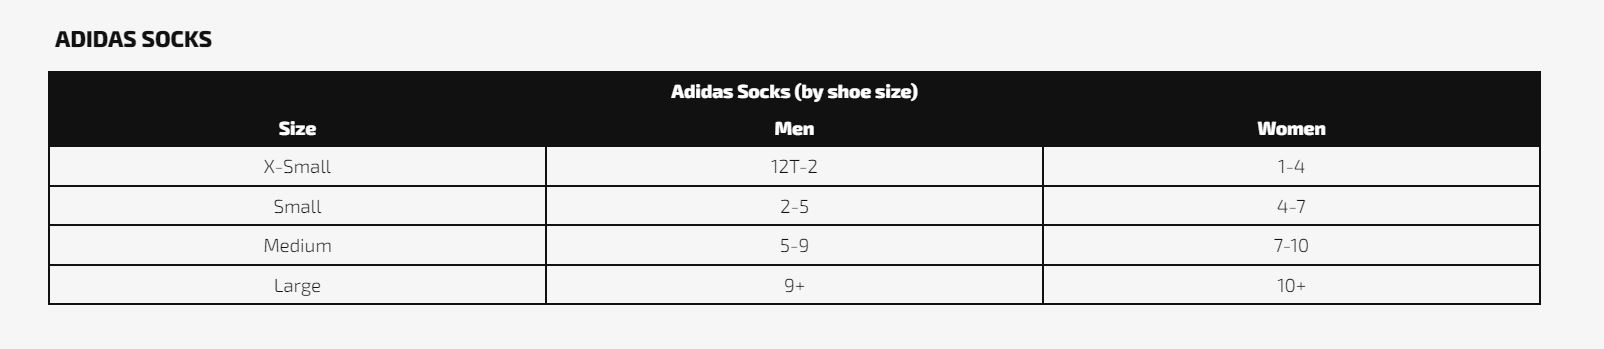 adidas socks size chart